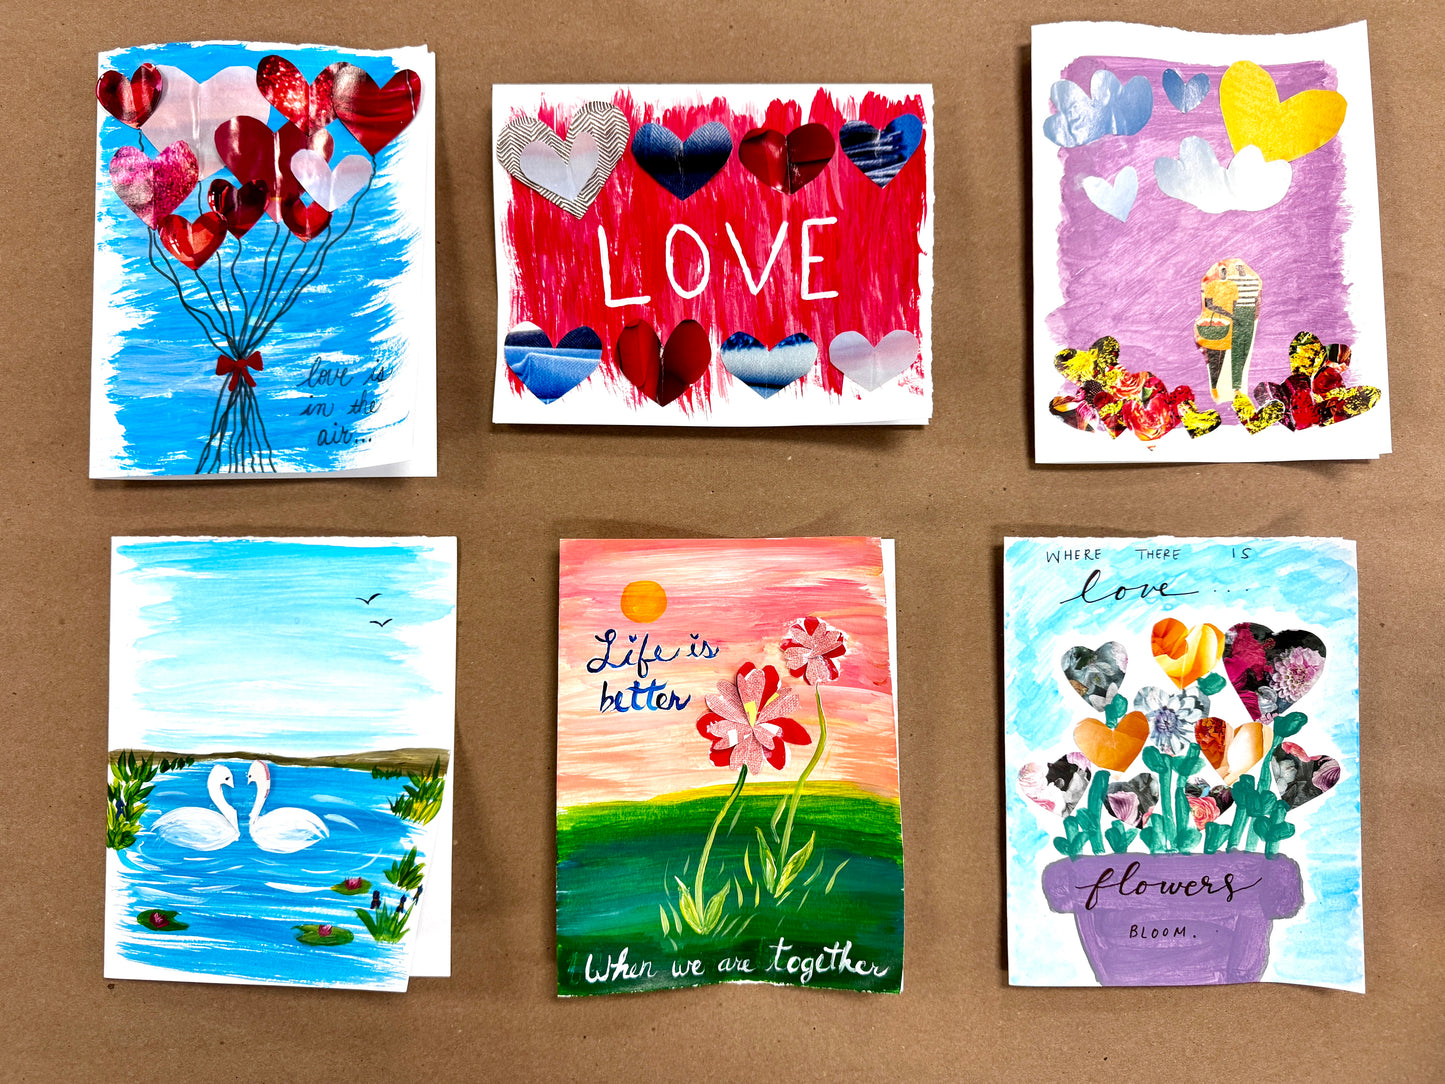 Sat, Feb 10th, 9-11A Kids Paint "Mixed Media Valentines" Houston Public Family Art Class